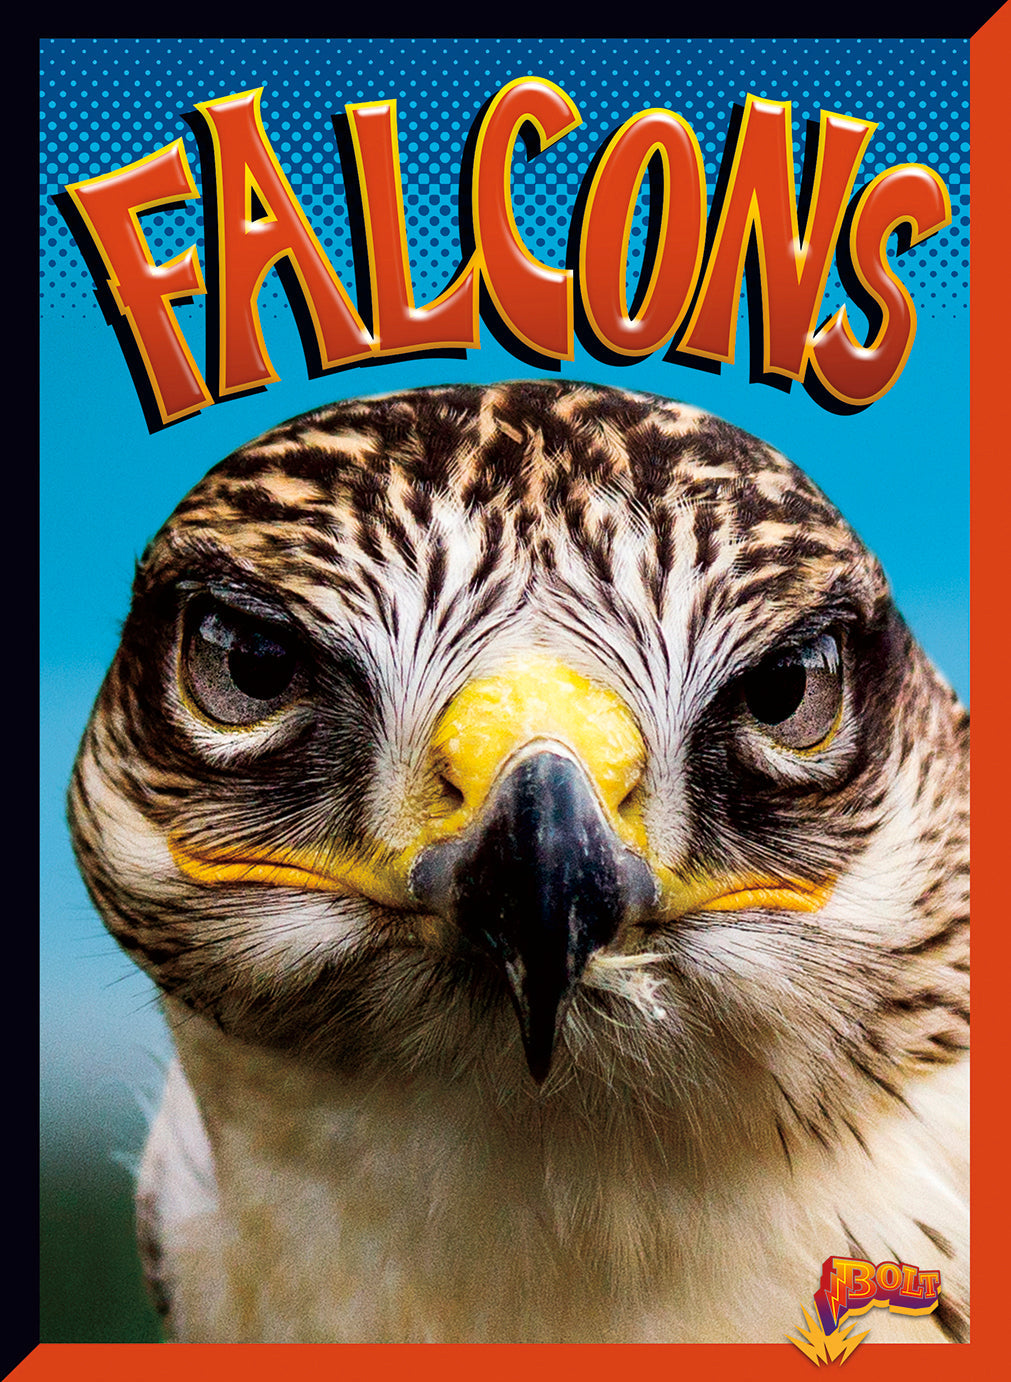 Birds of Prey: Falcons